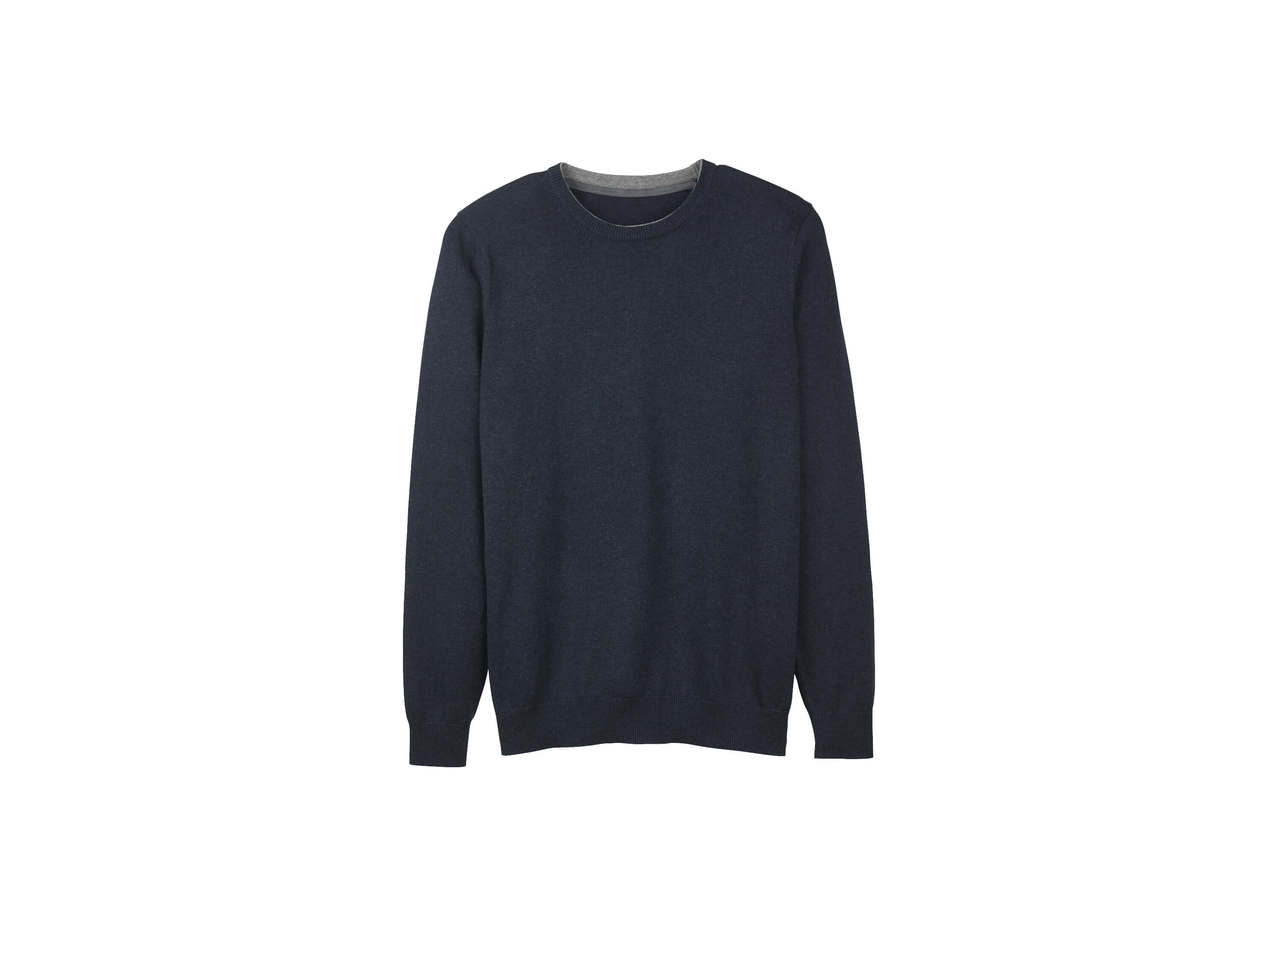 LIVERGY(R) Finstrikket sweater